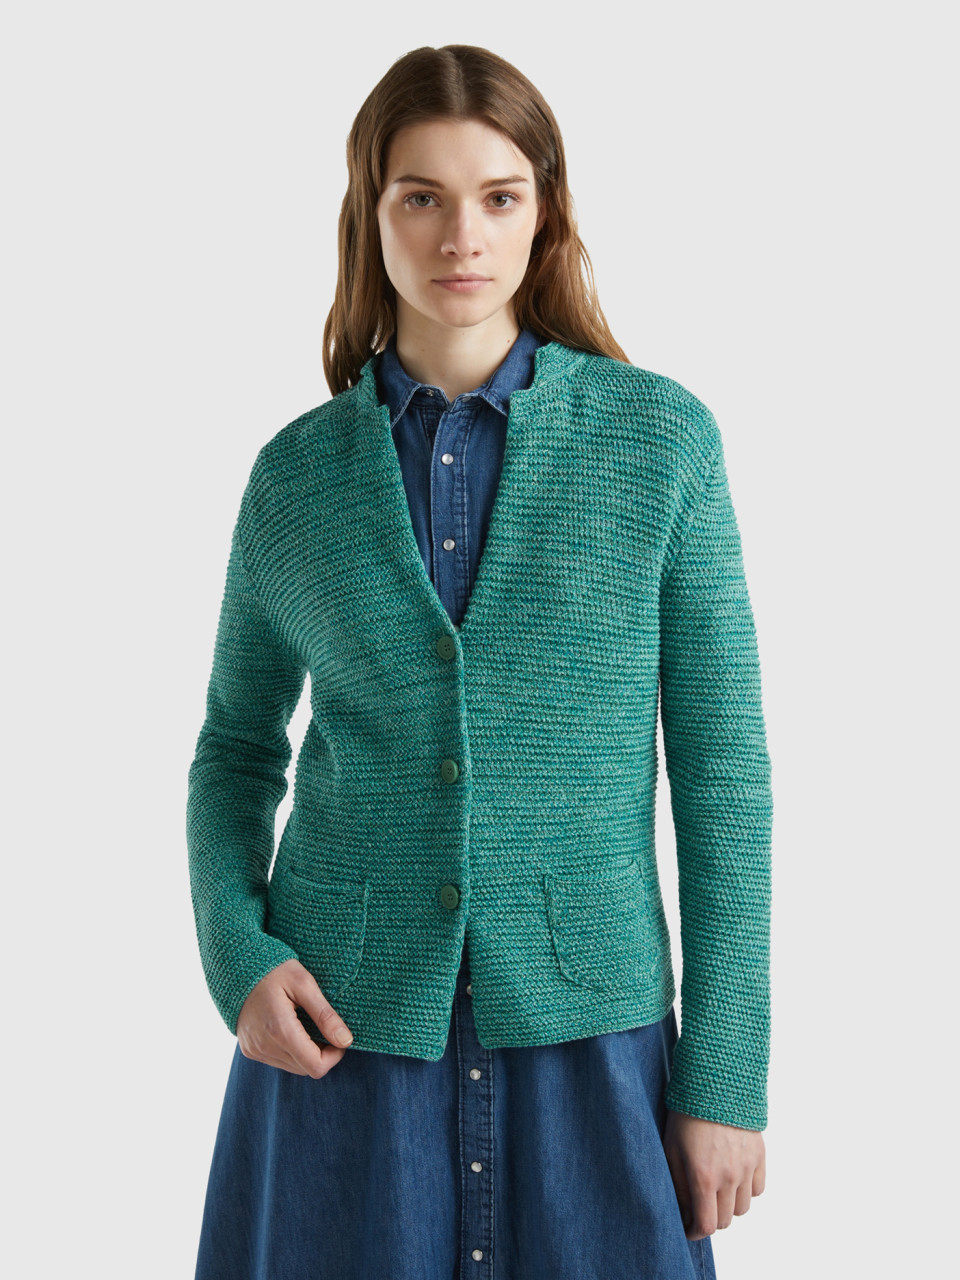 Benetton, 100% Cotton Knit Jacket, Teal, Women